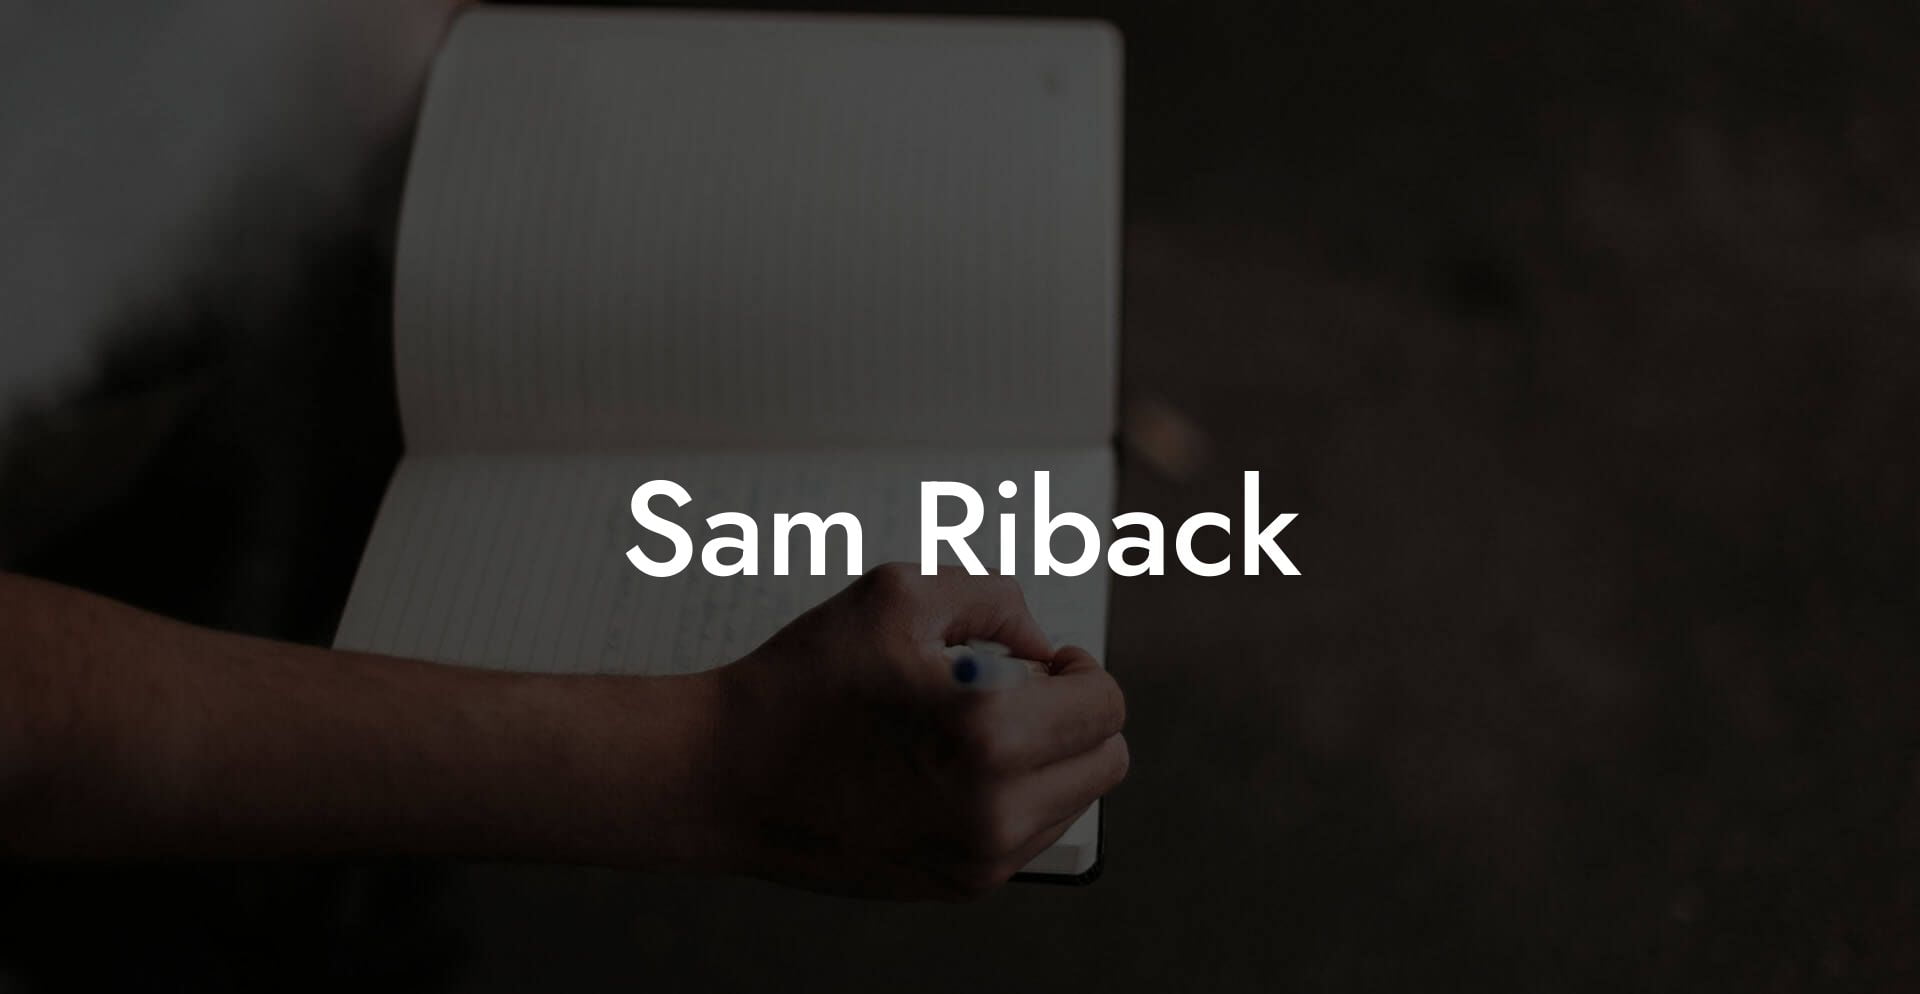 Sam Riback